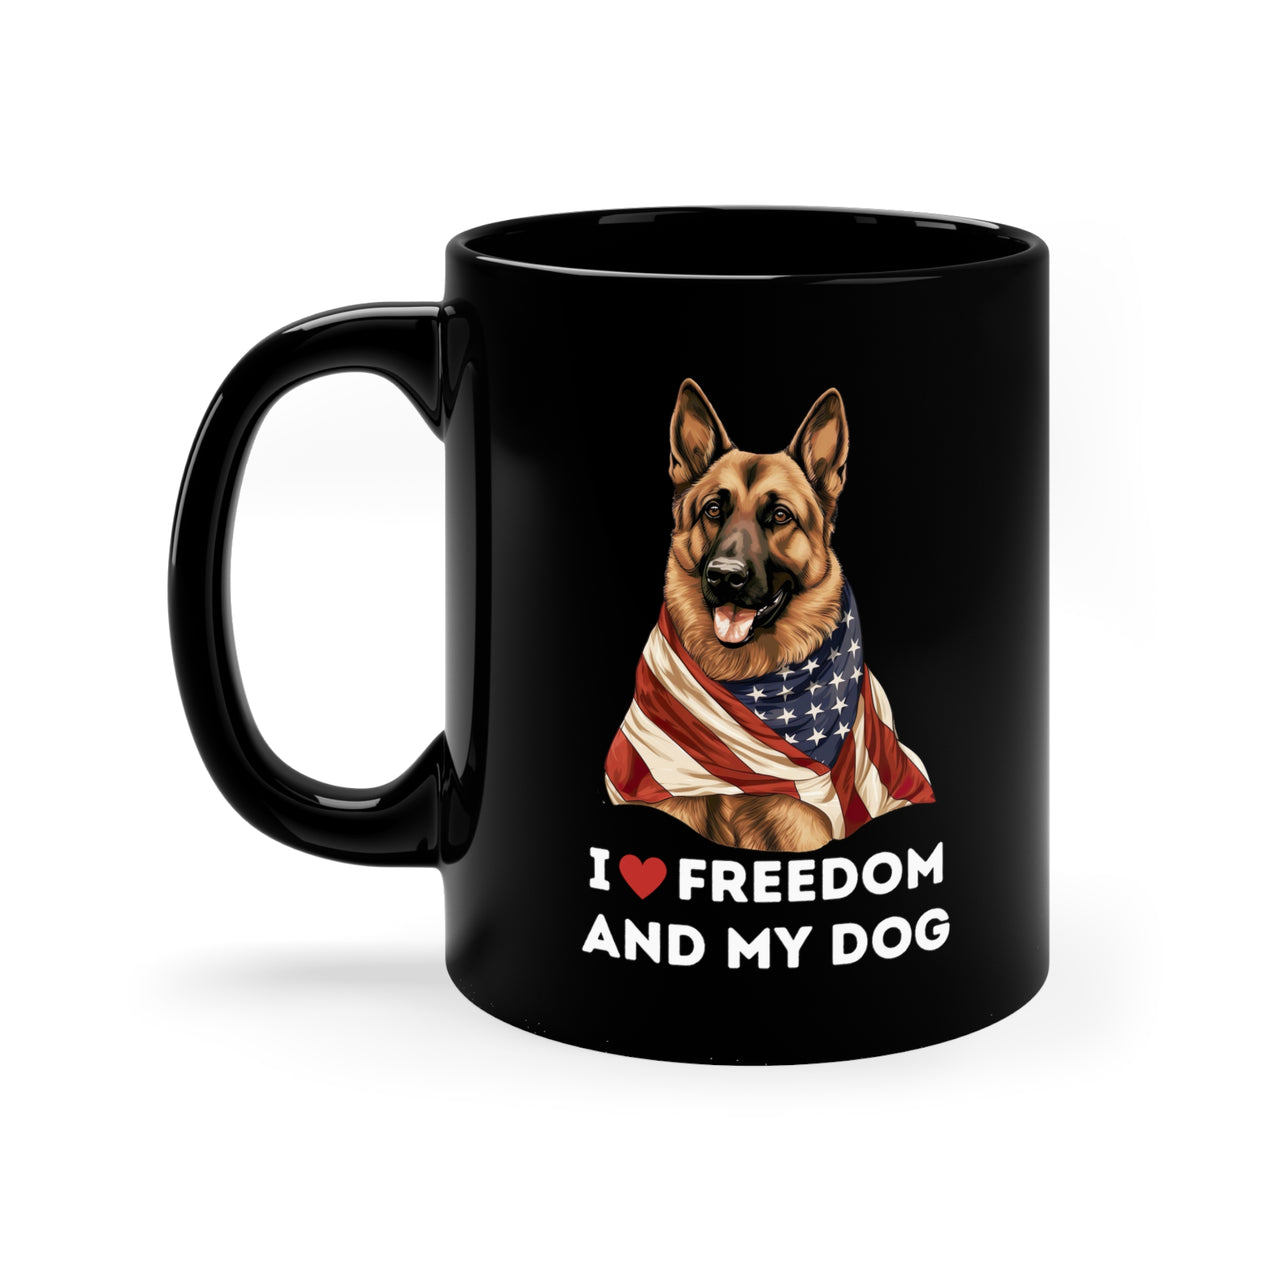 I Love Freedom and My Dog Black Mug, 11oz